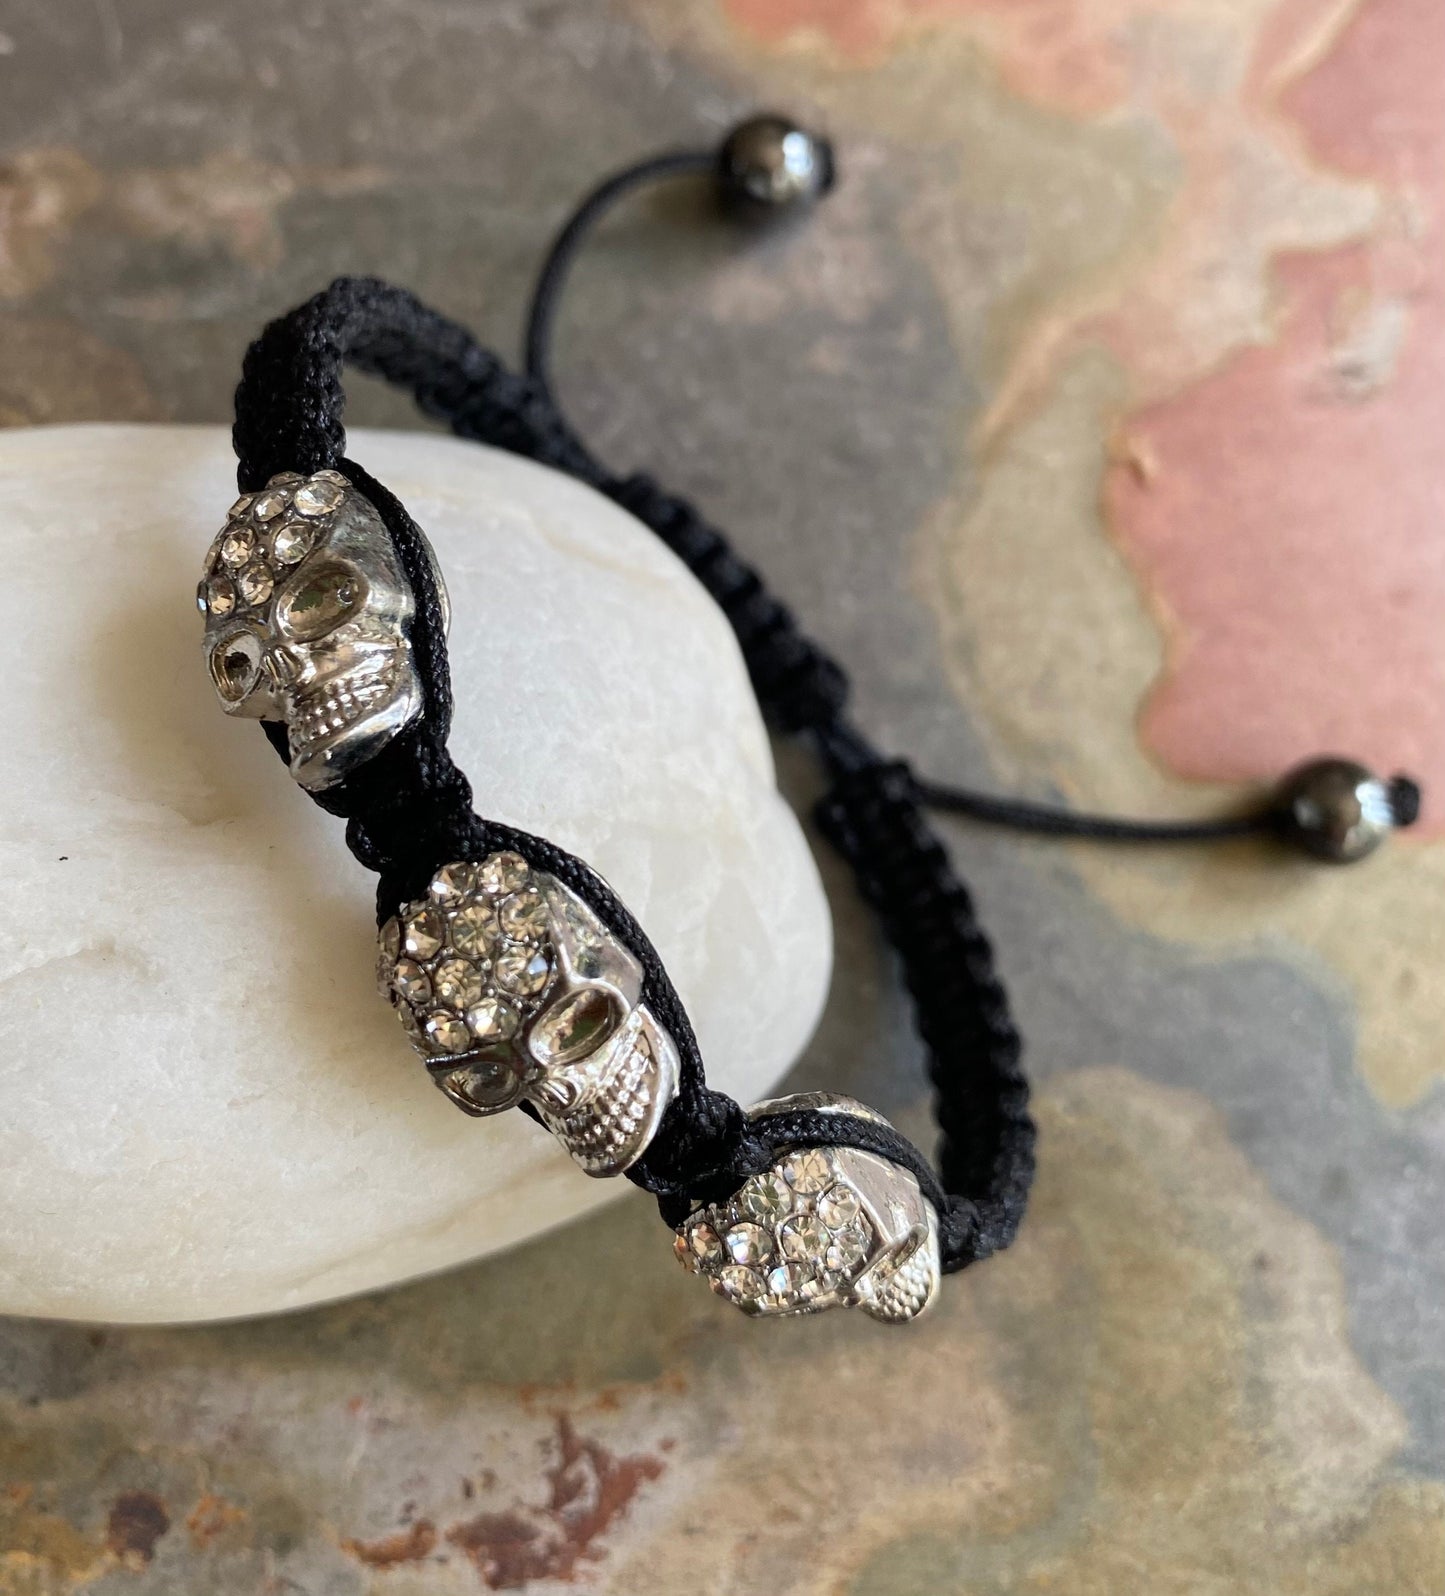 Skull Head Bracelet in Macrame with Crystals & Hematite beads. Adjustable Skull Head Bracelet, Bling Crystal Skull Head Bracelet, Macrame